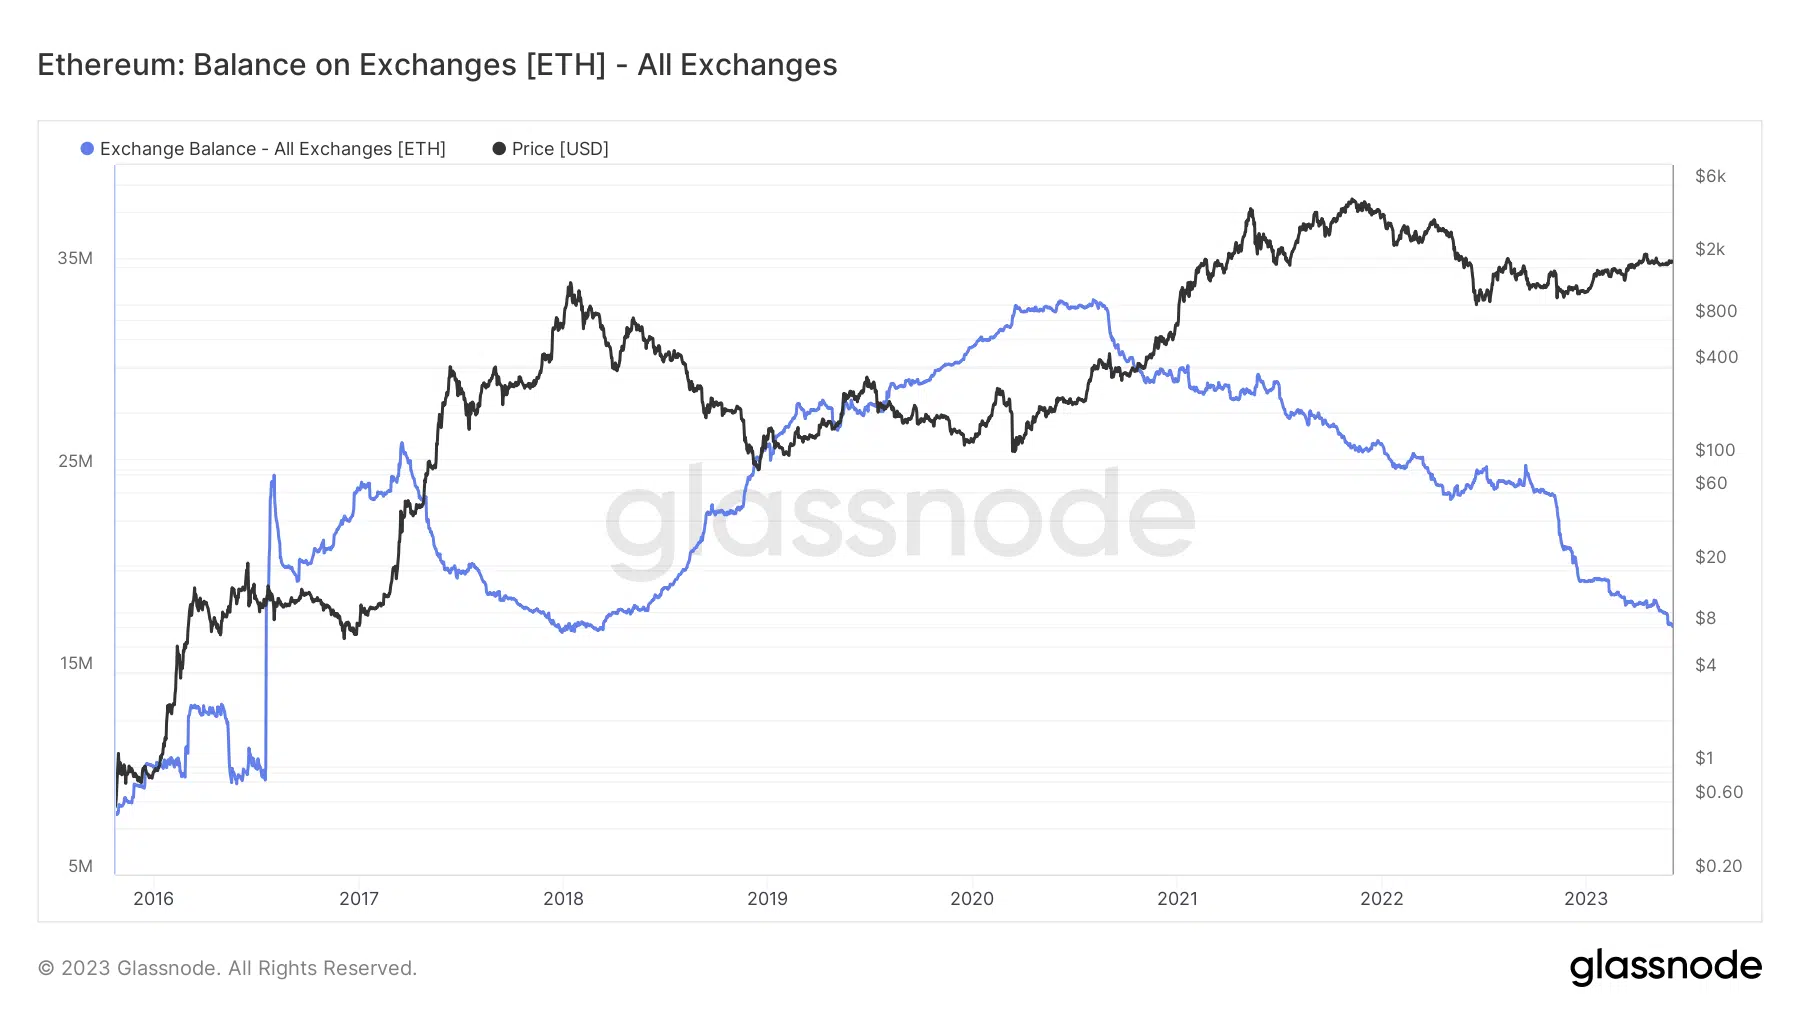 Ethereum balance on exchanges